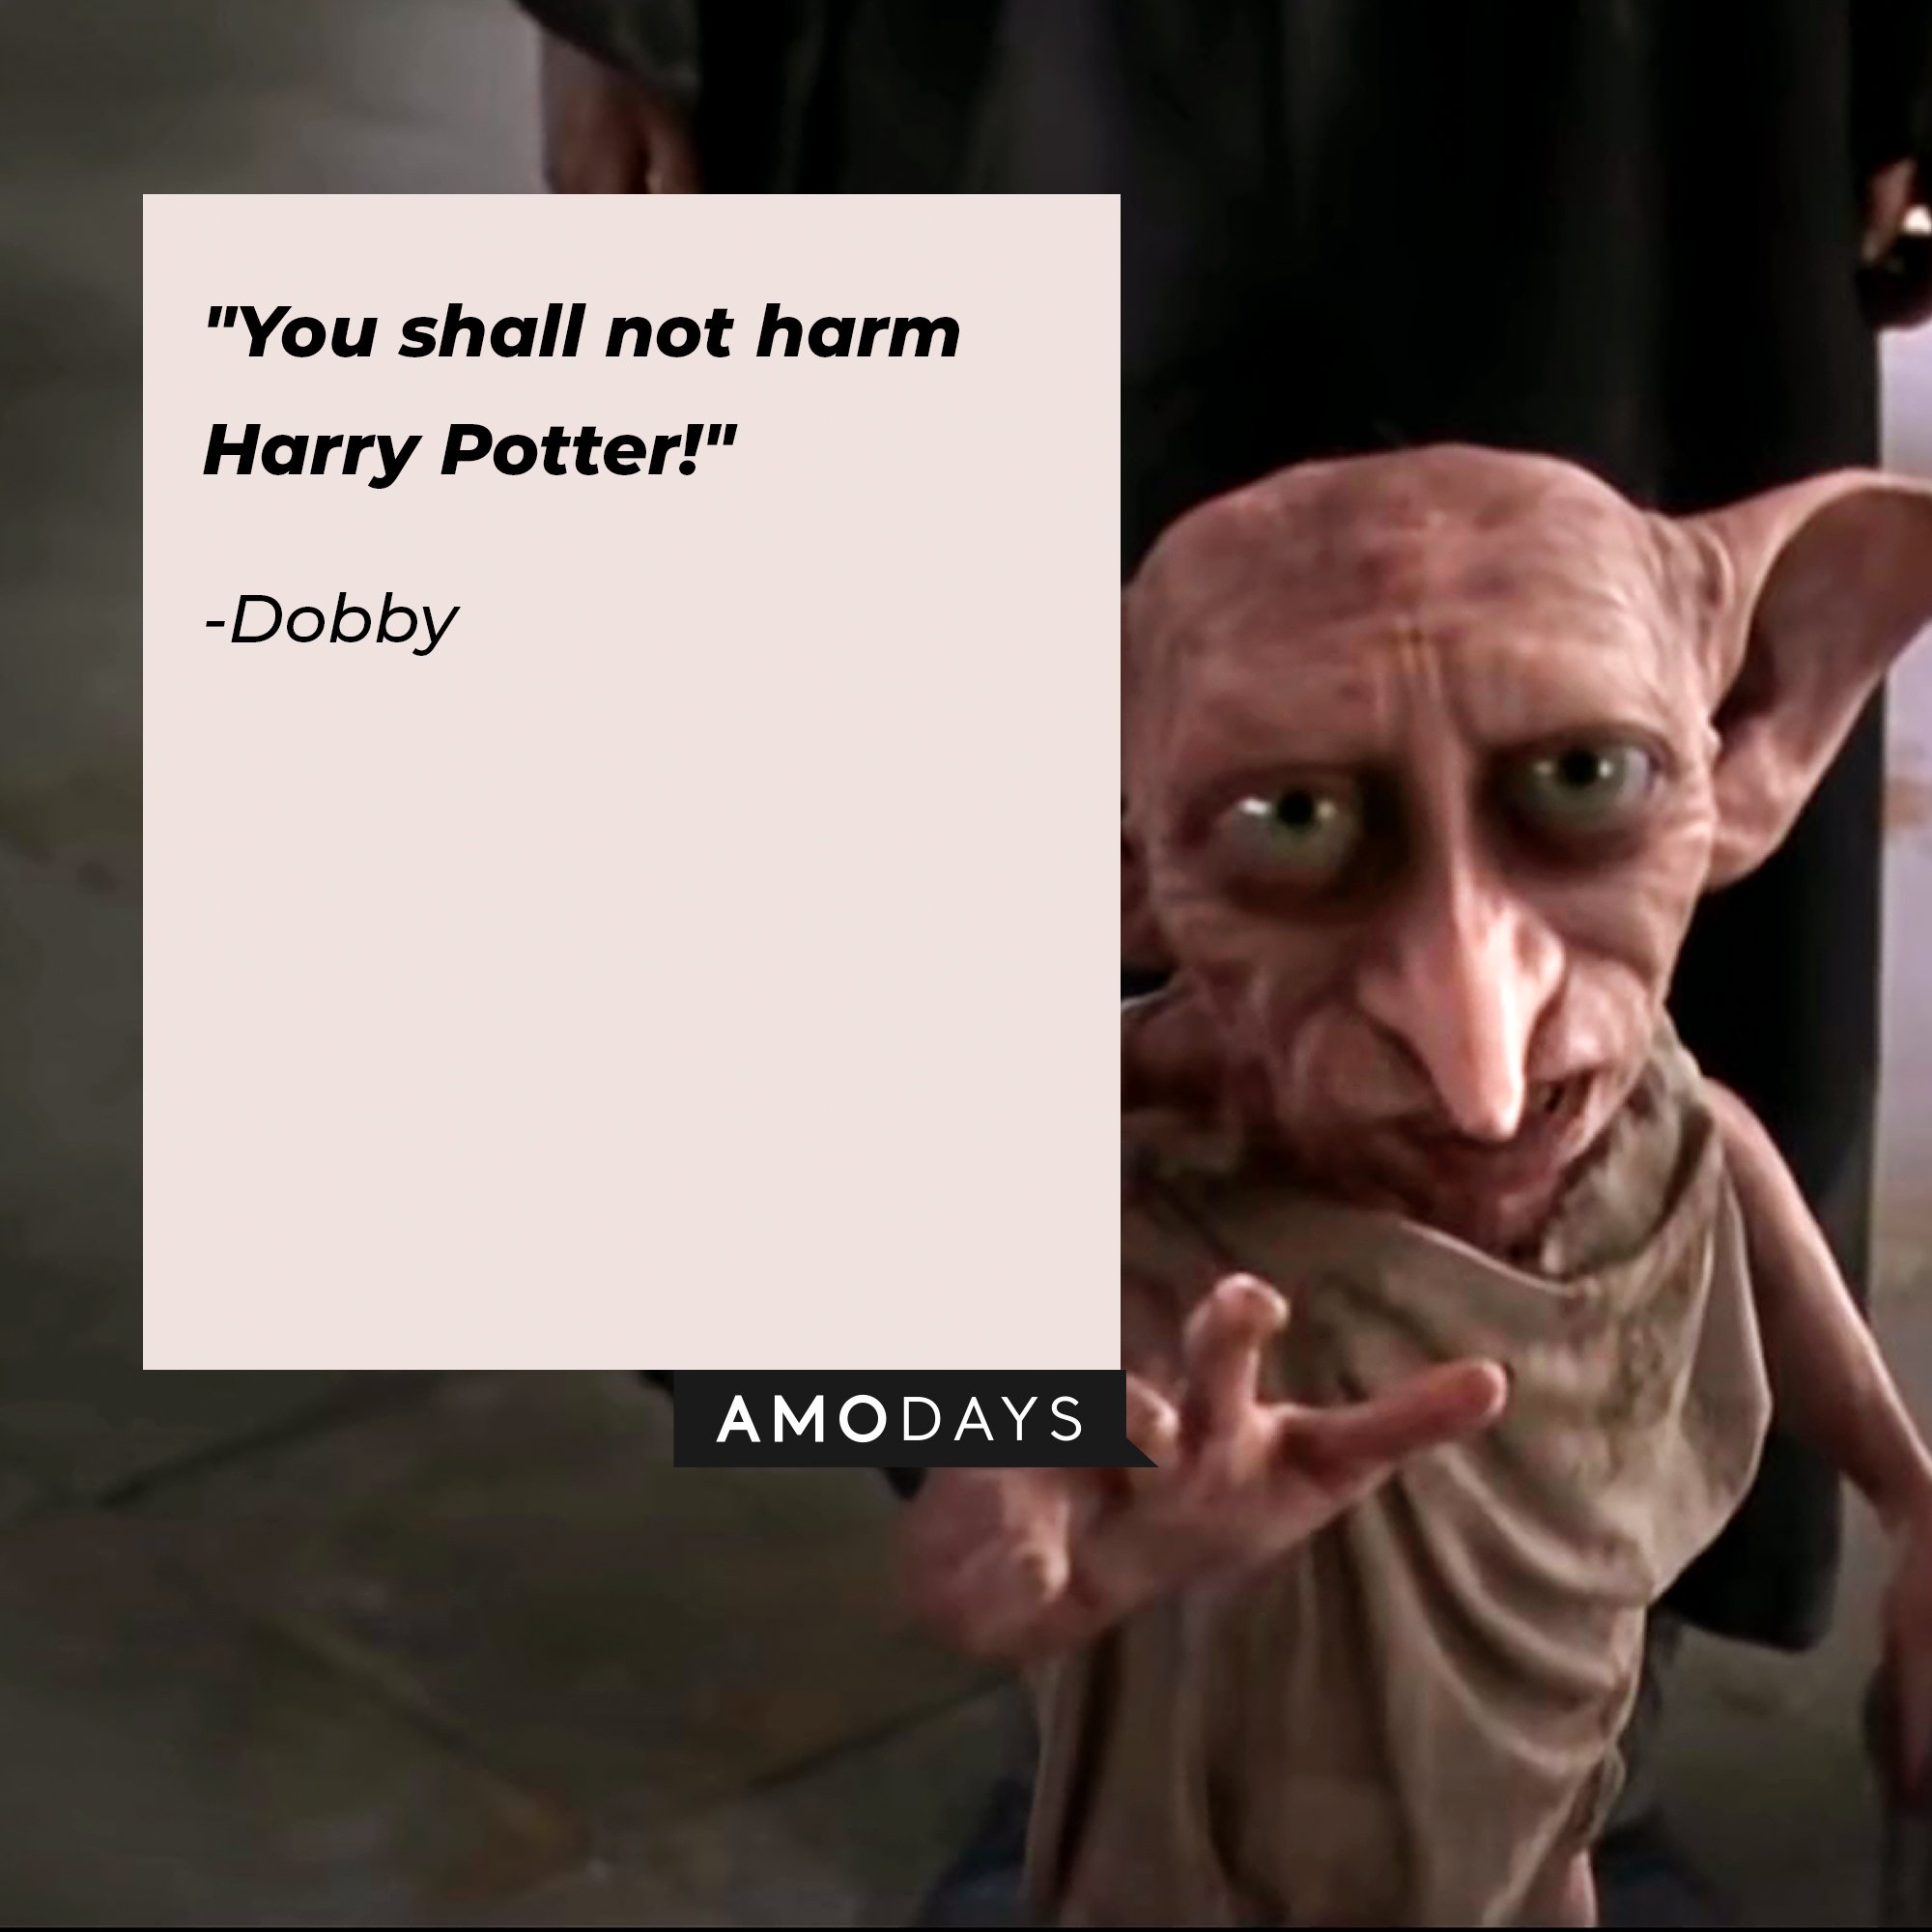 Dobby’s quote: "You shall not harm Harry Potter!” | Image: AmoDays